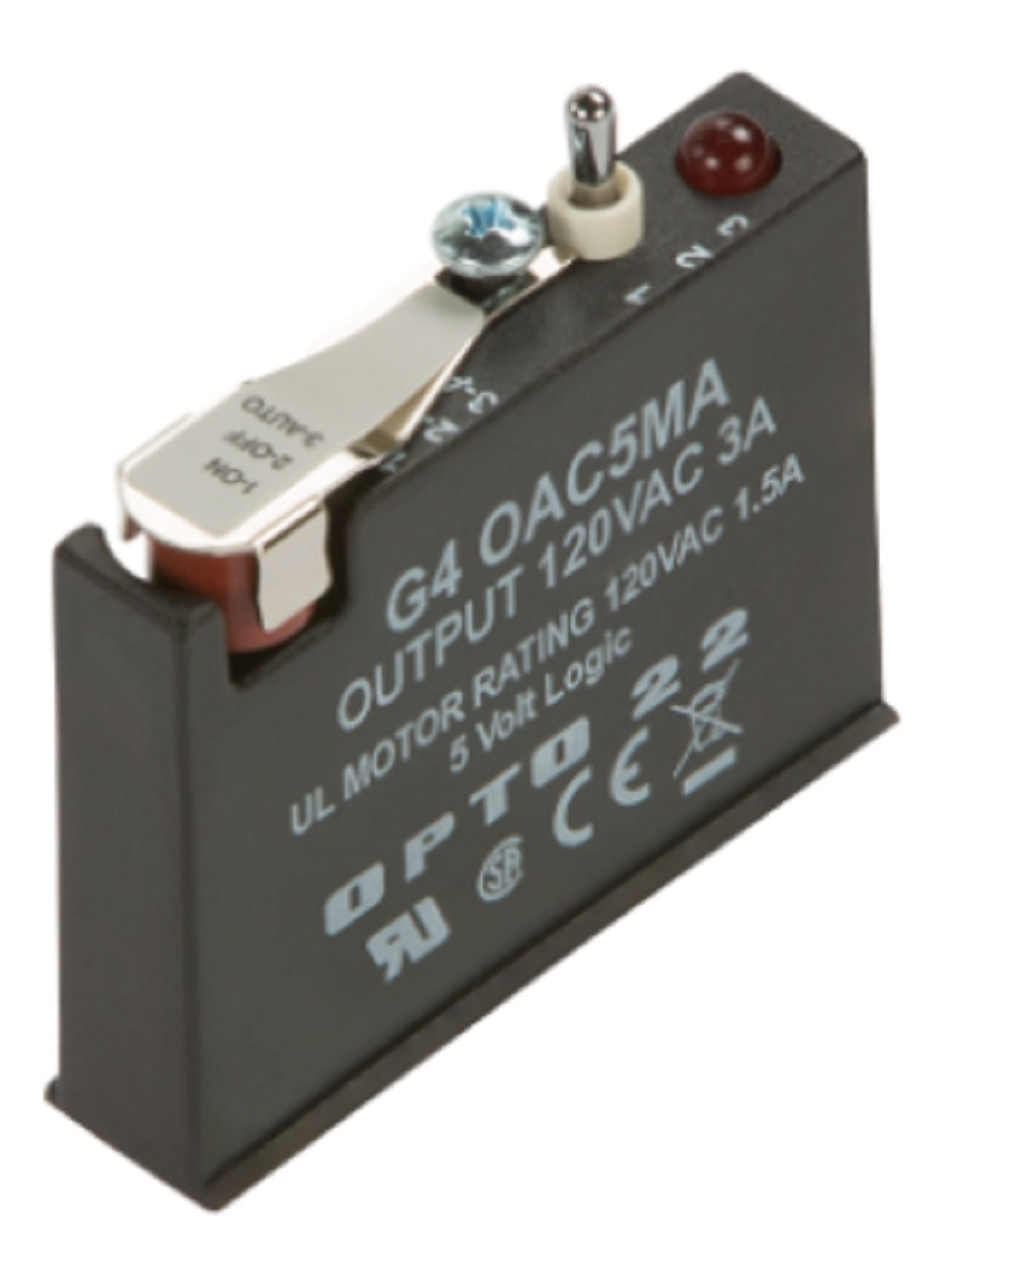 Opto 22 G4OAC5MA G4 AC Output 12-140 VAC, 5 VDC Logic with Manual/Auto Switch [Refurbished]